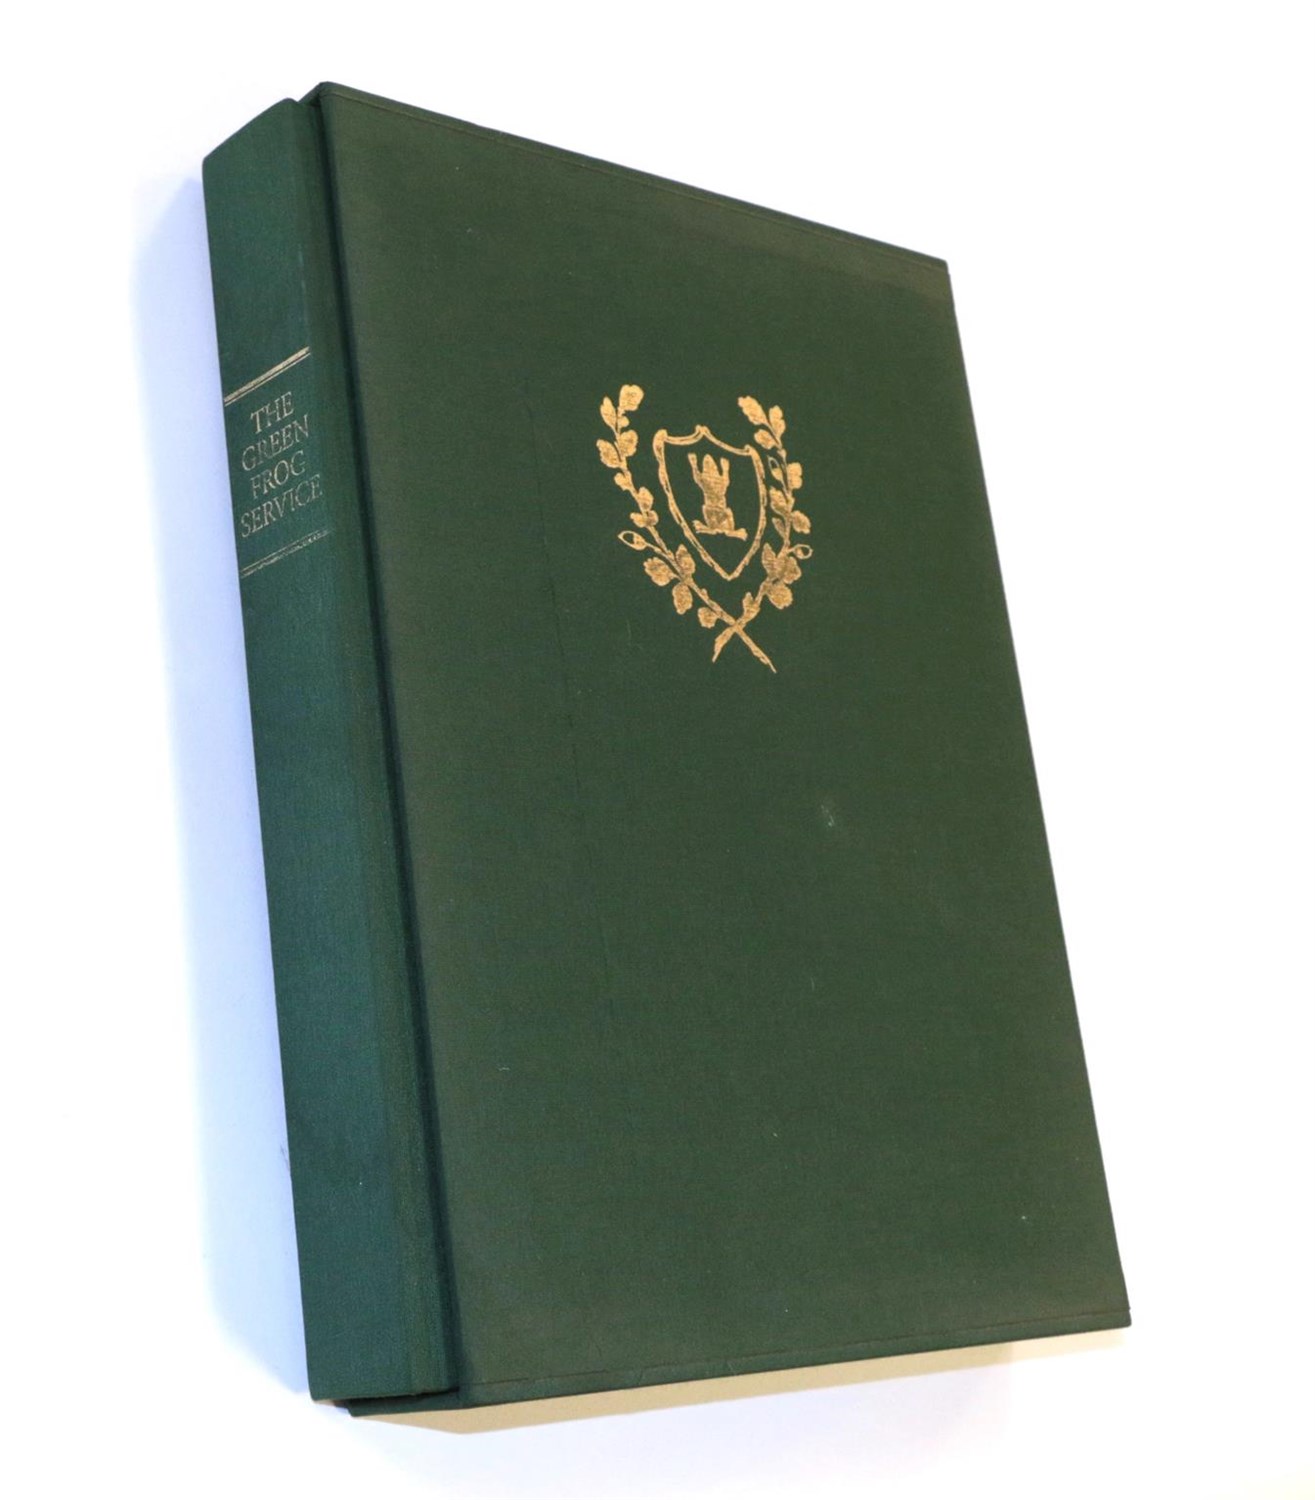 Lot 3007 - Raeburn (Michael) et al (edits.) The Green Frog Service, Cacklegoose Press/State Hermitage,...